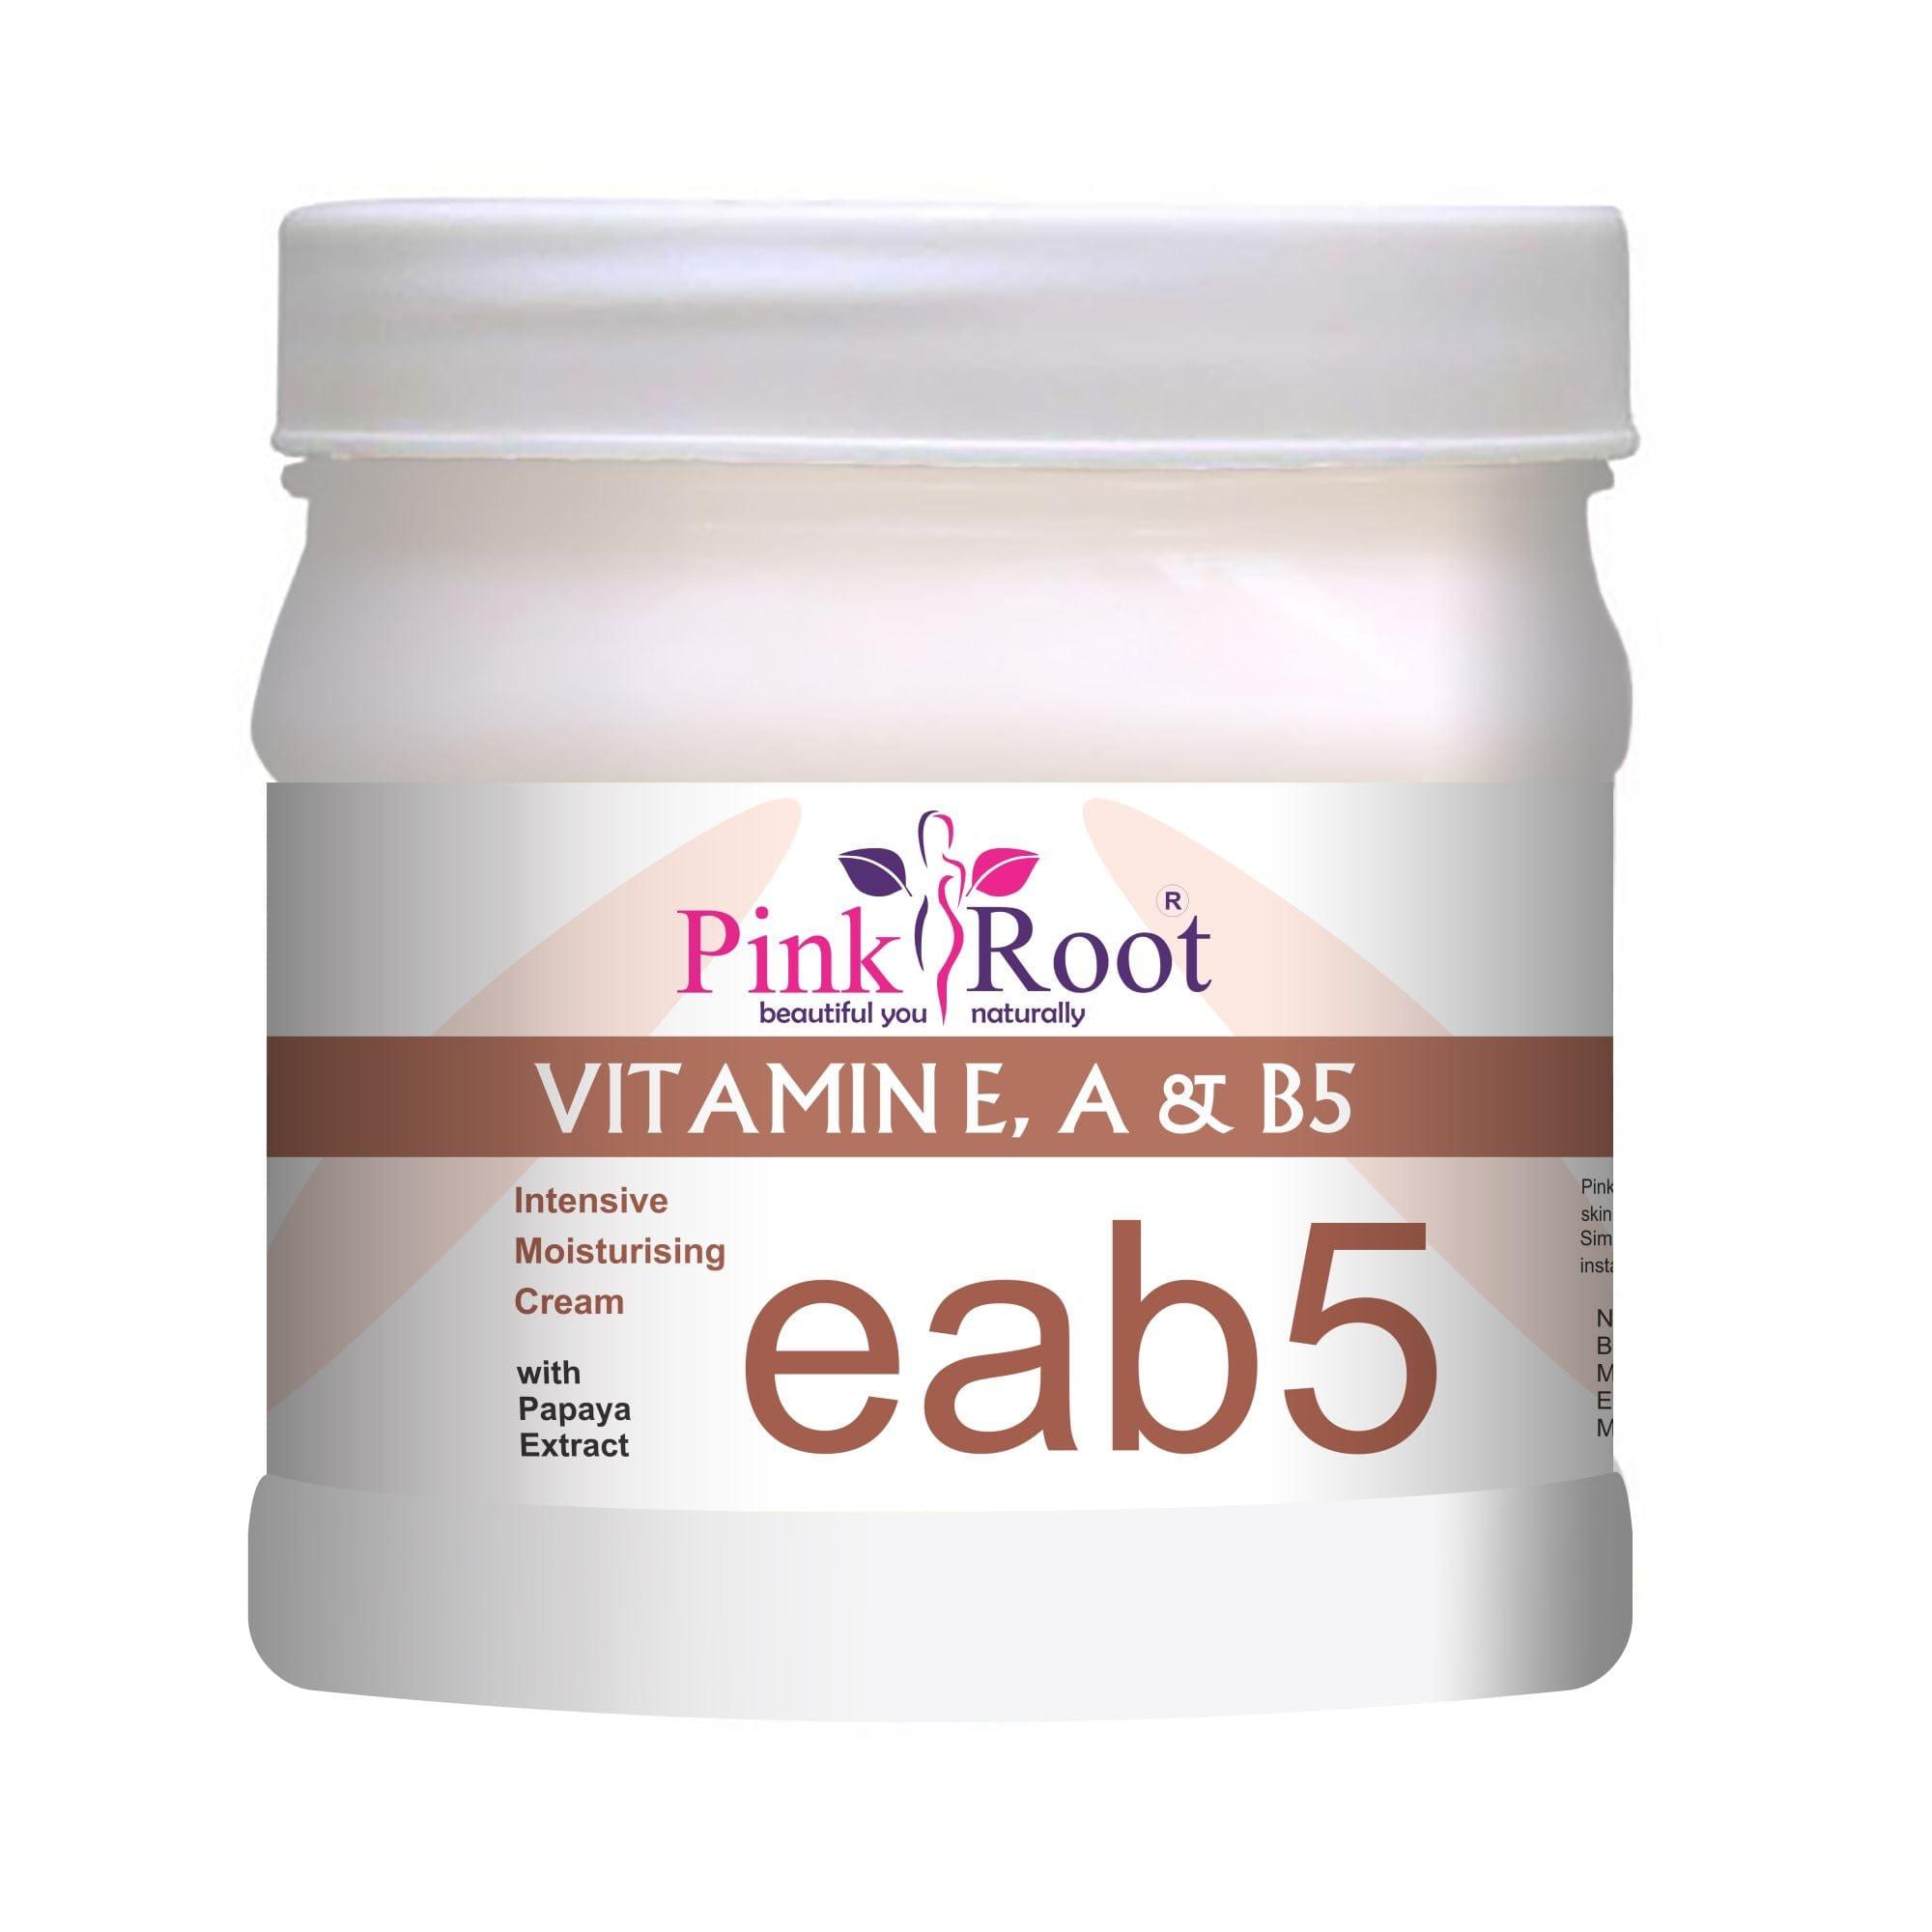 Vitamine E, A & B5 Intensive Moisturising Cream 500ml - Pink Root